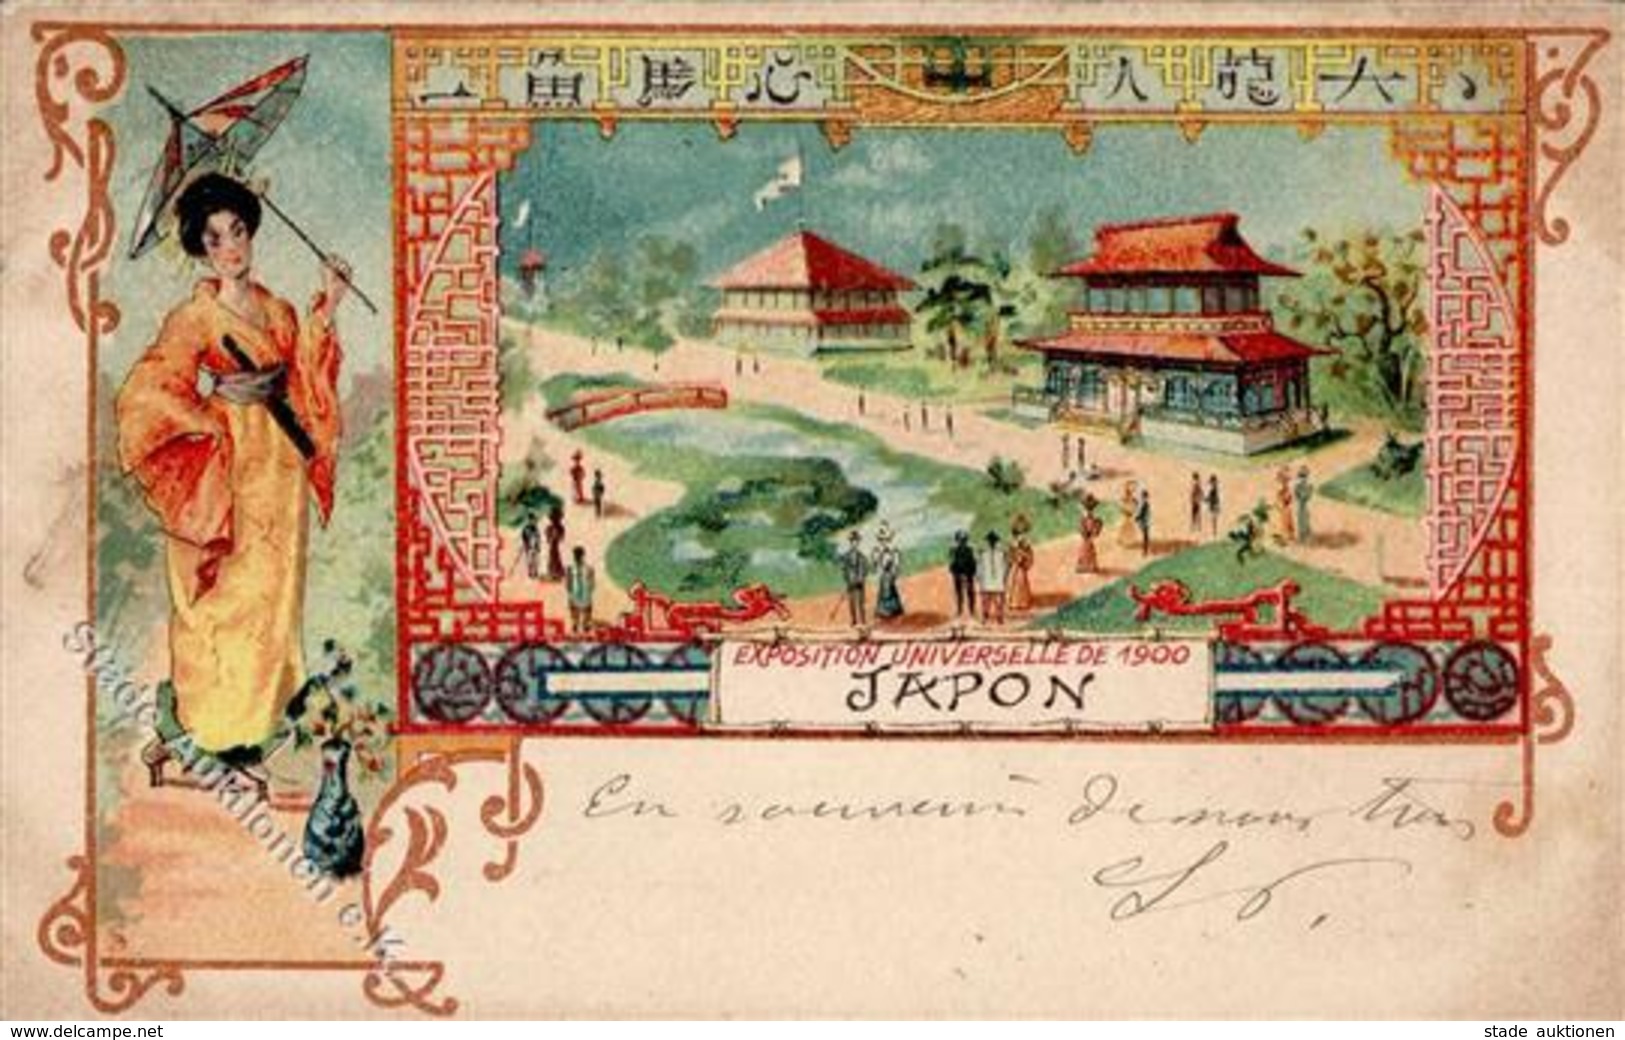 Ausstellung Paris (75000) Frankreich Exposition Universelle Japan Lithographie 1900 I-II (fleckig) Expo - Exhibitions